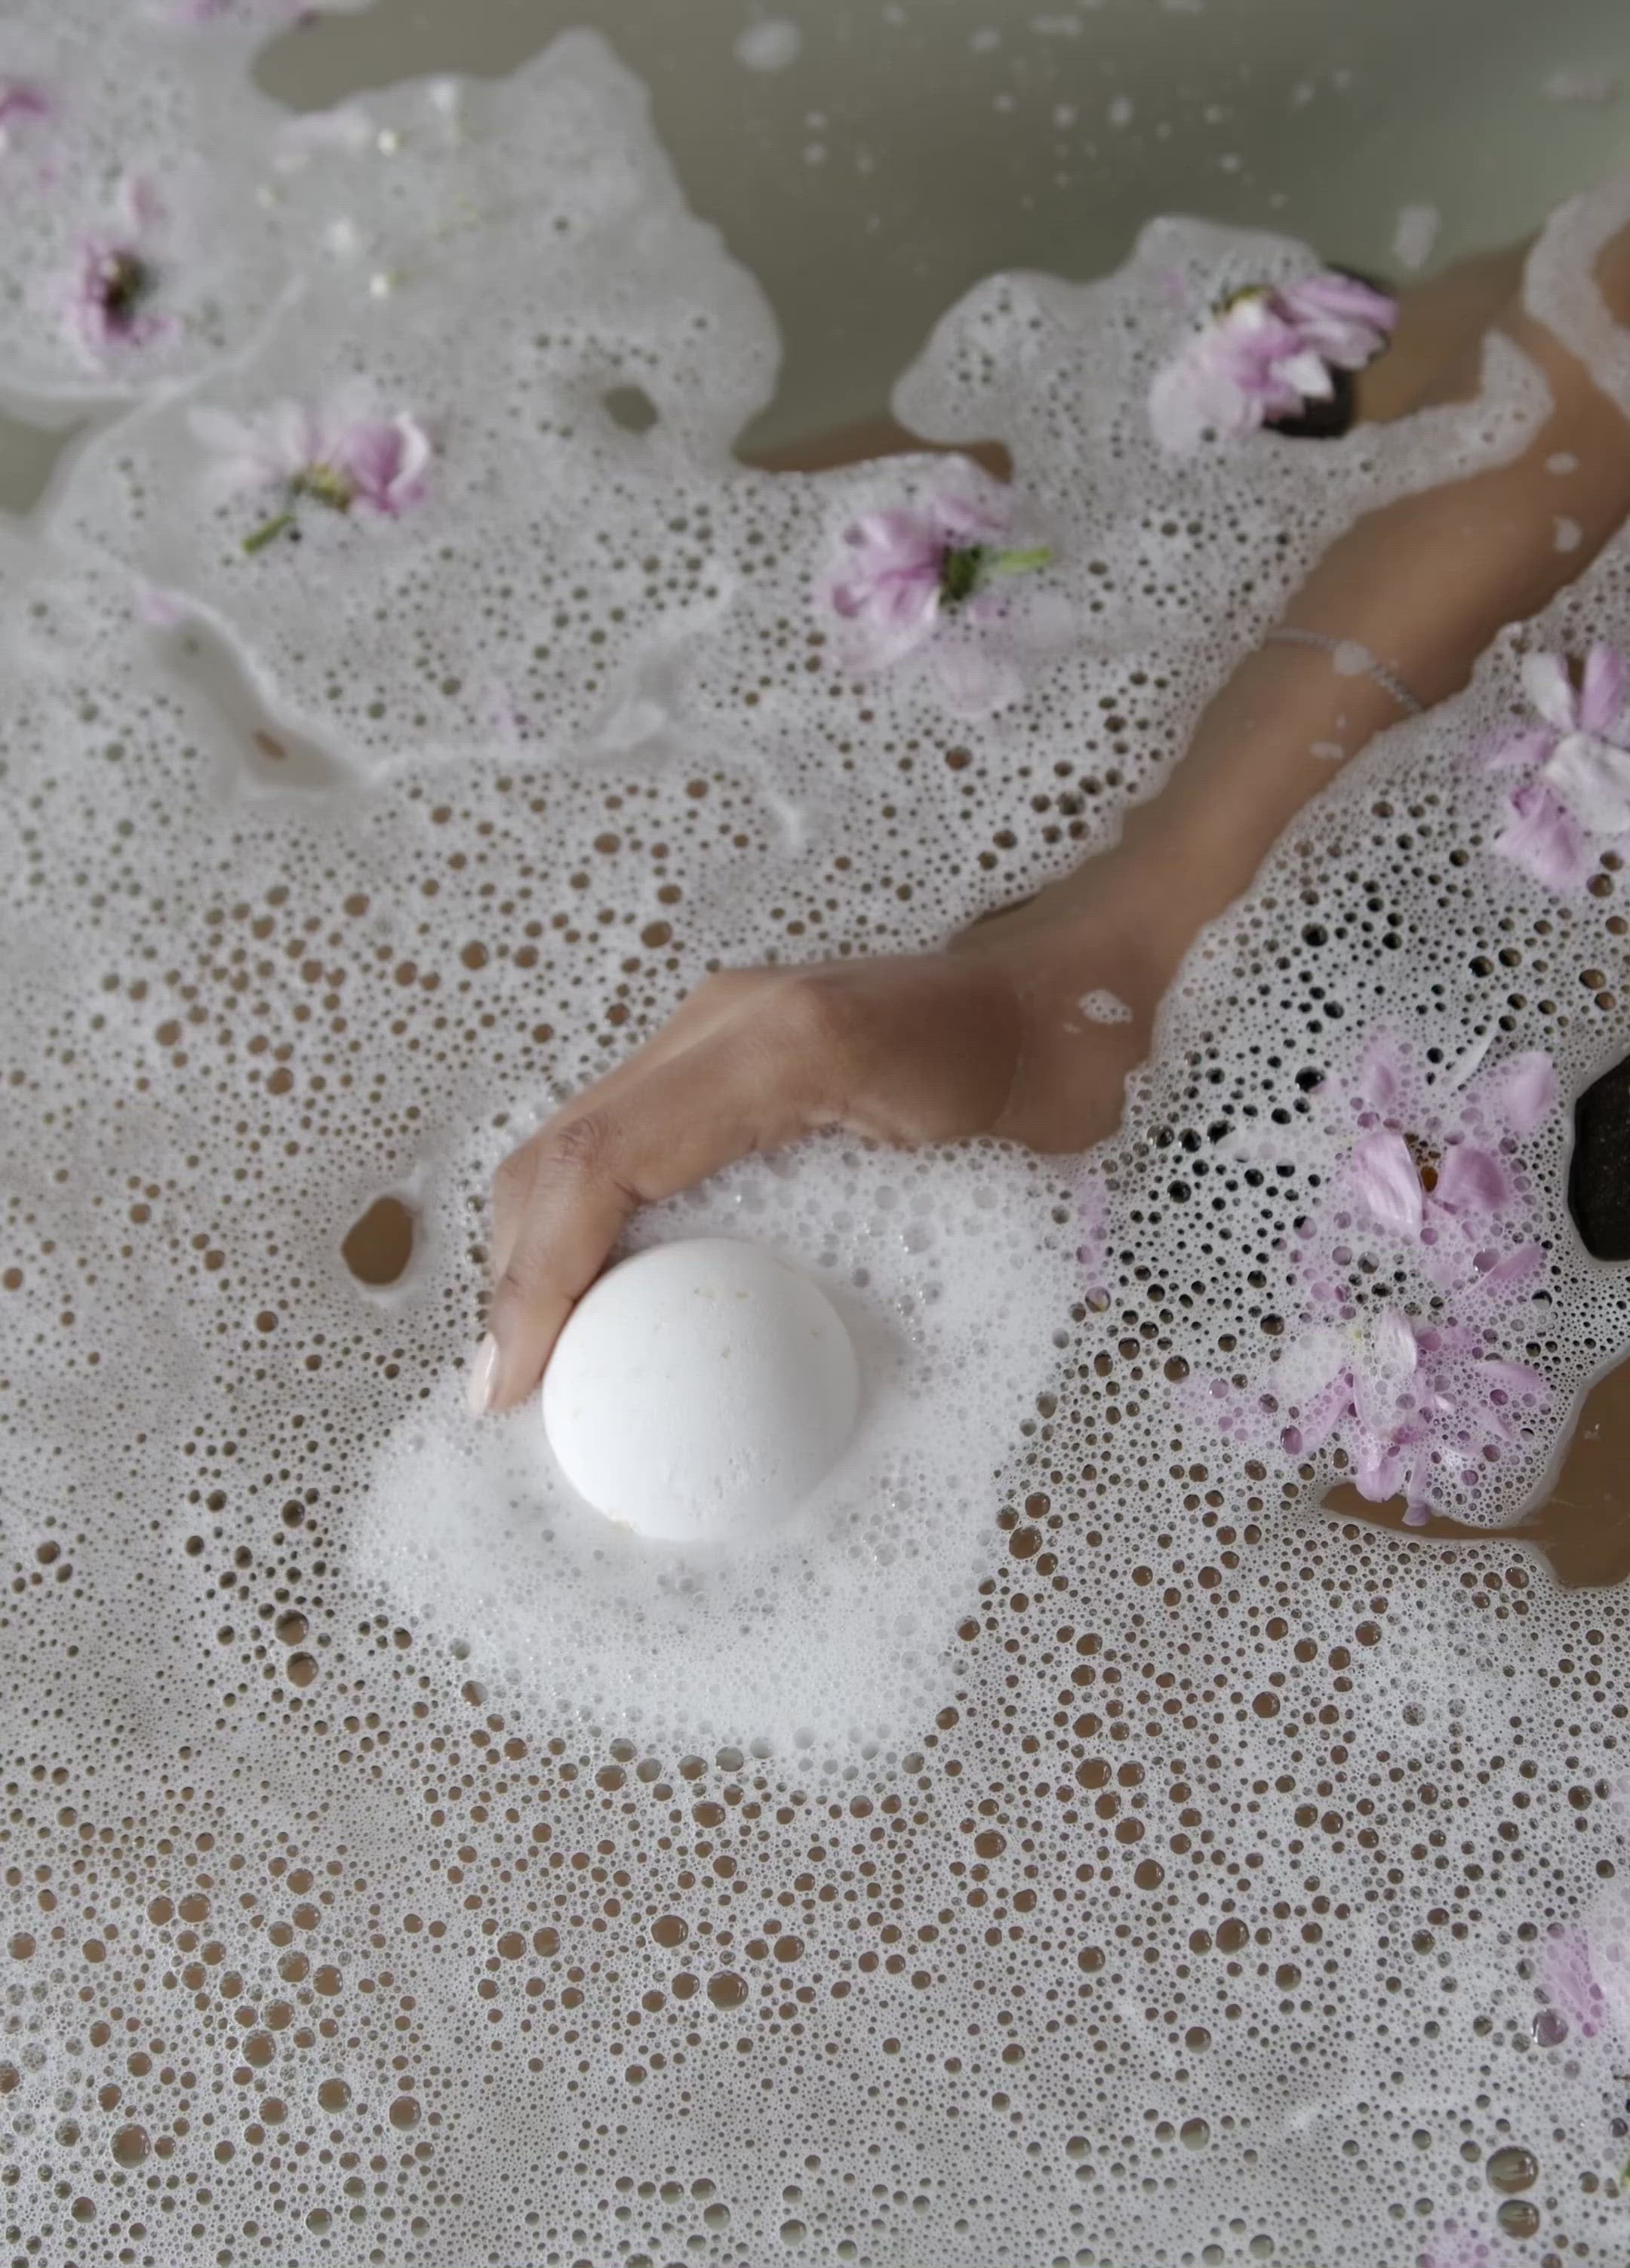 Vrolijke mini Bath Bombs – Herbal Sweets